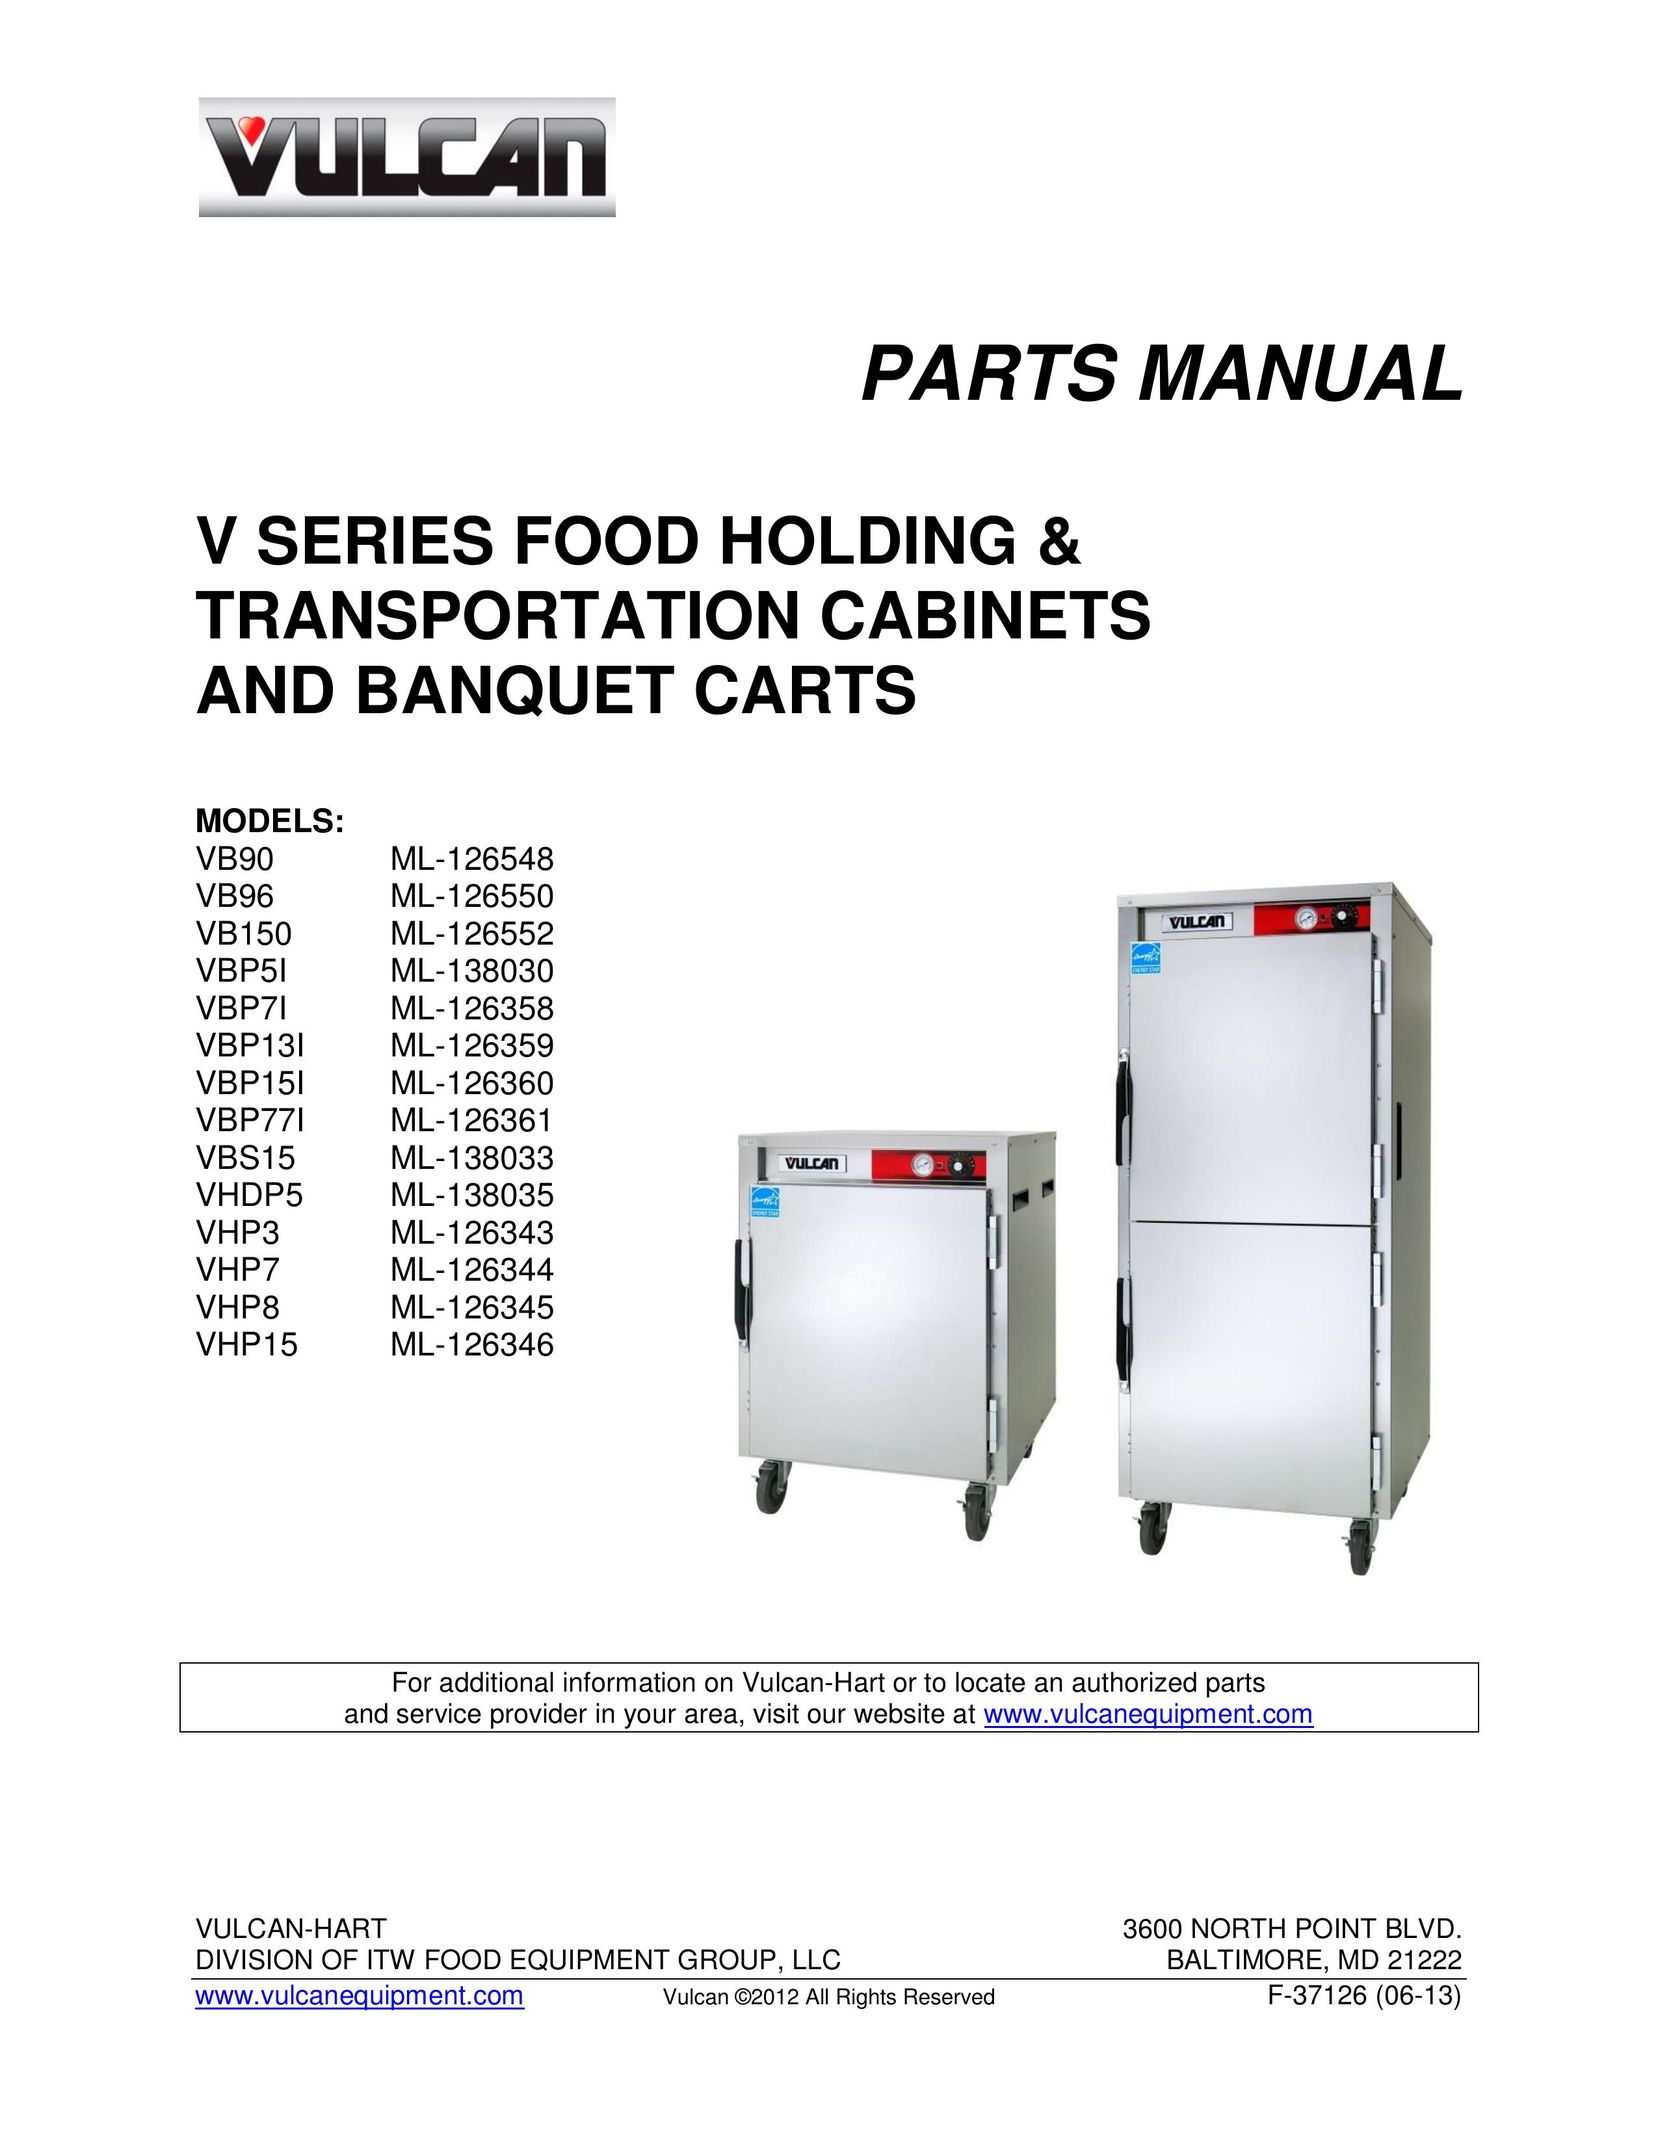 Vulcan-Hart VHP15 ML-126346 TV Mount User Manual